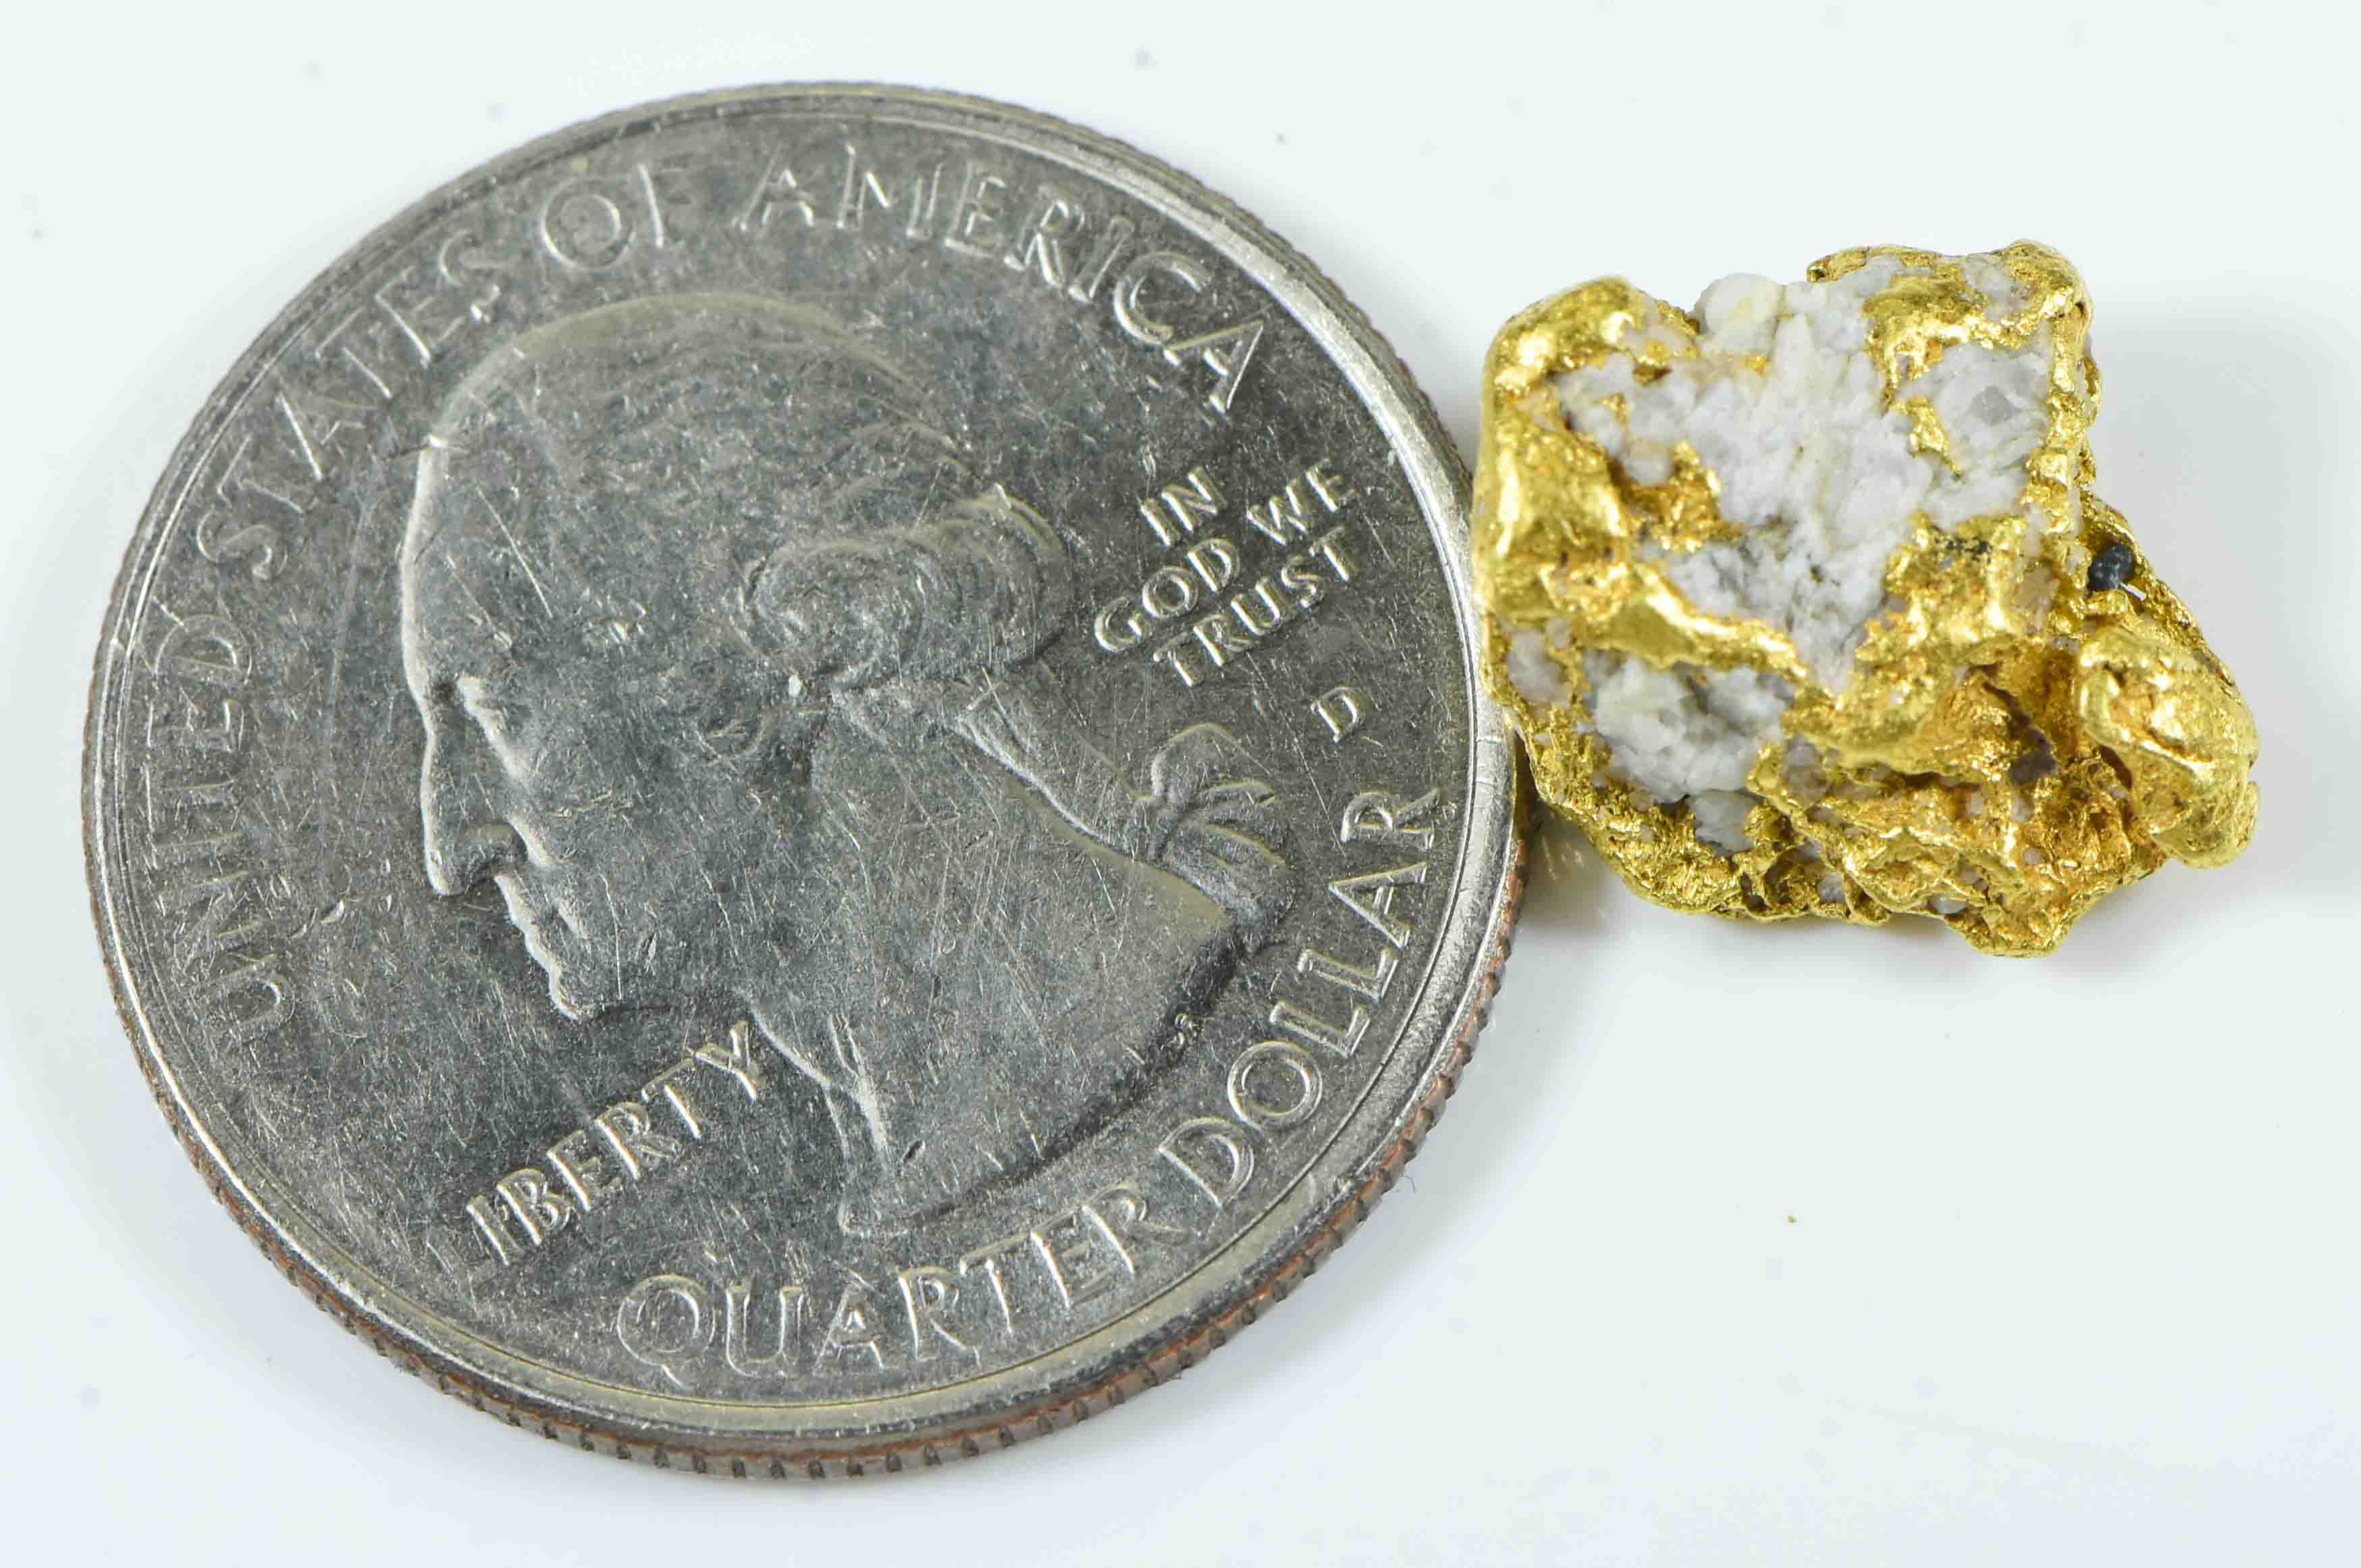 QN-109 "Alaskan BC Gold Nuggets with Quartz" Genuine 3.56 Grams